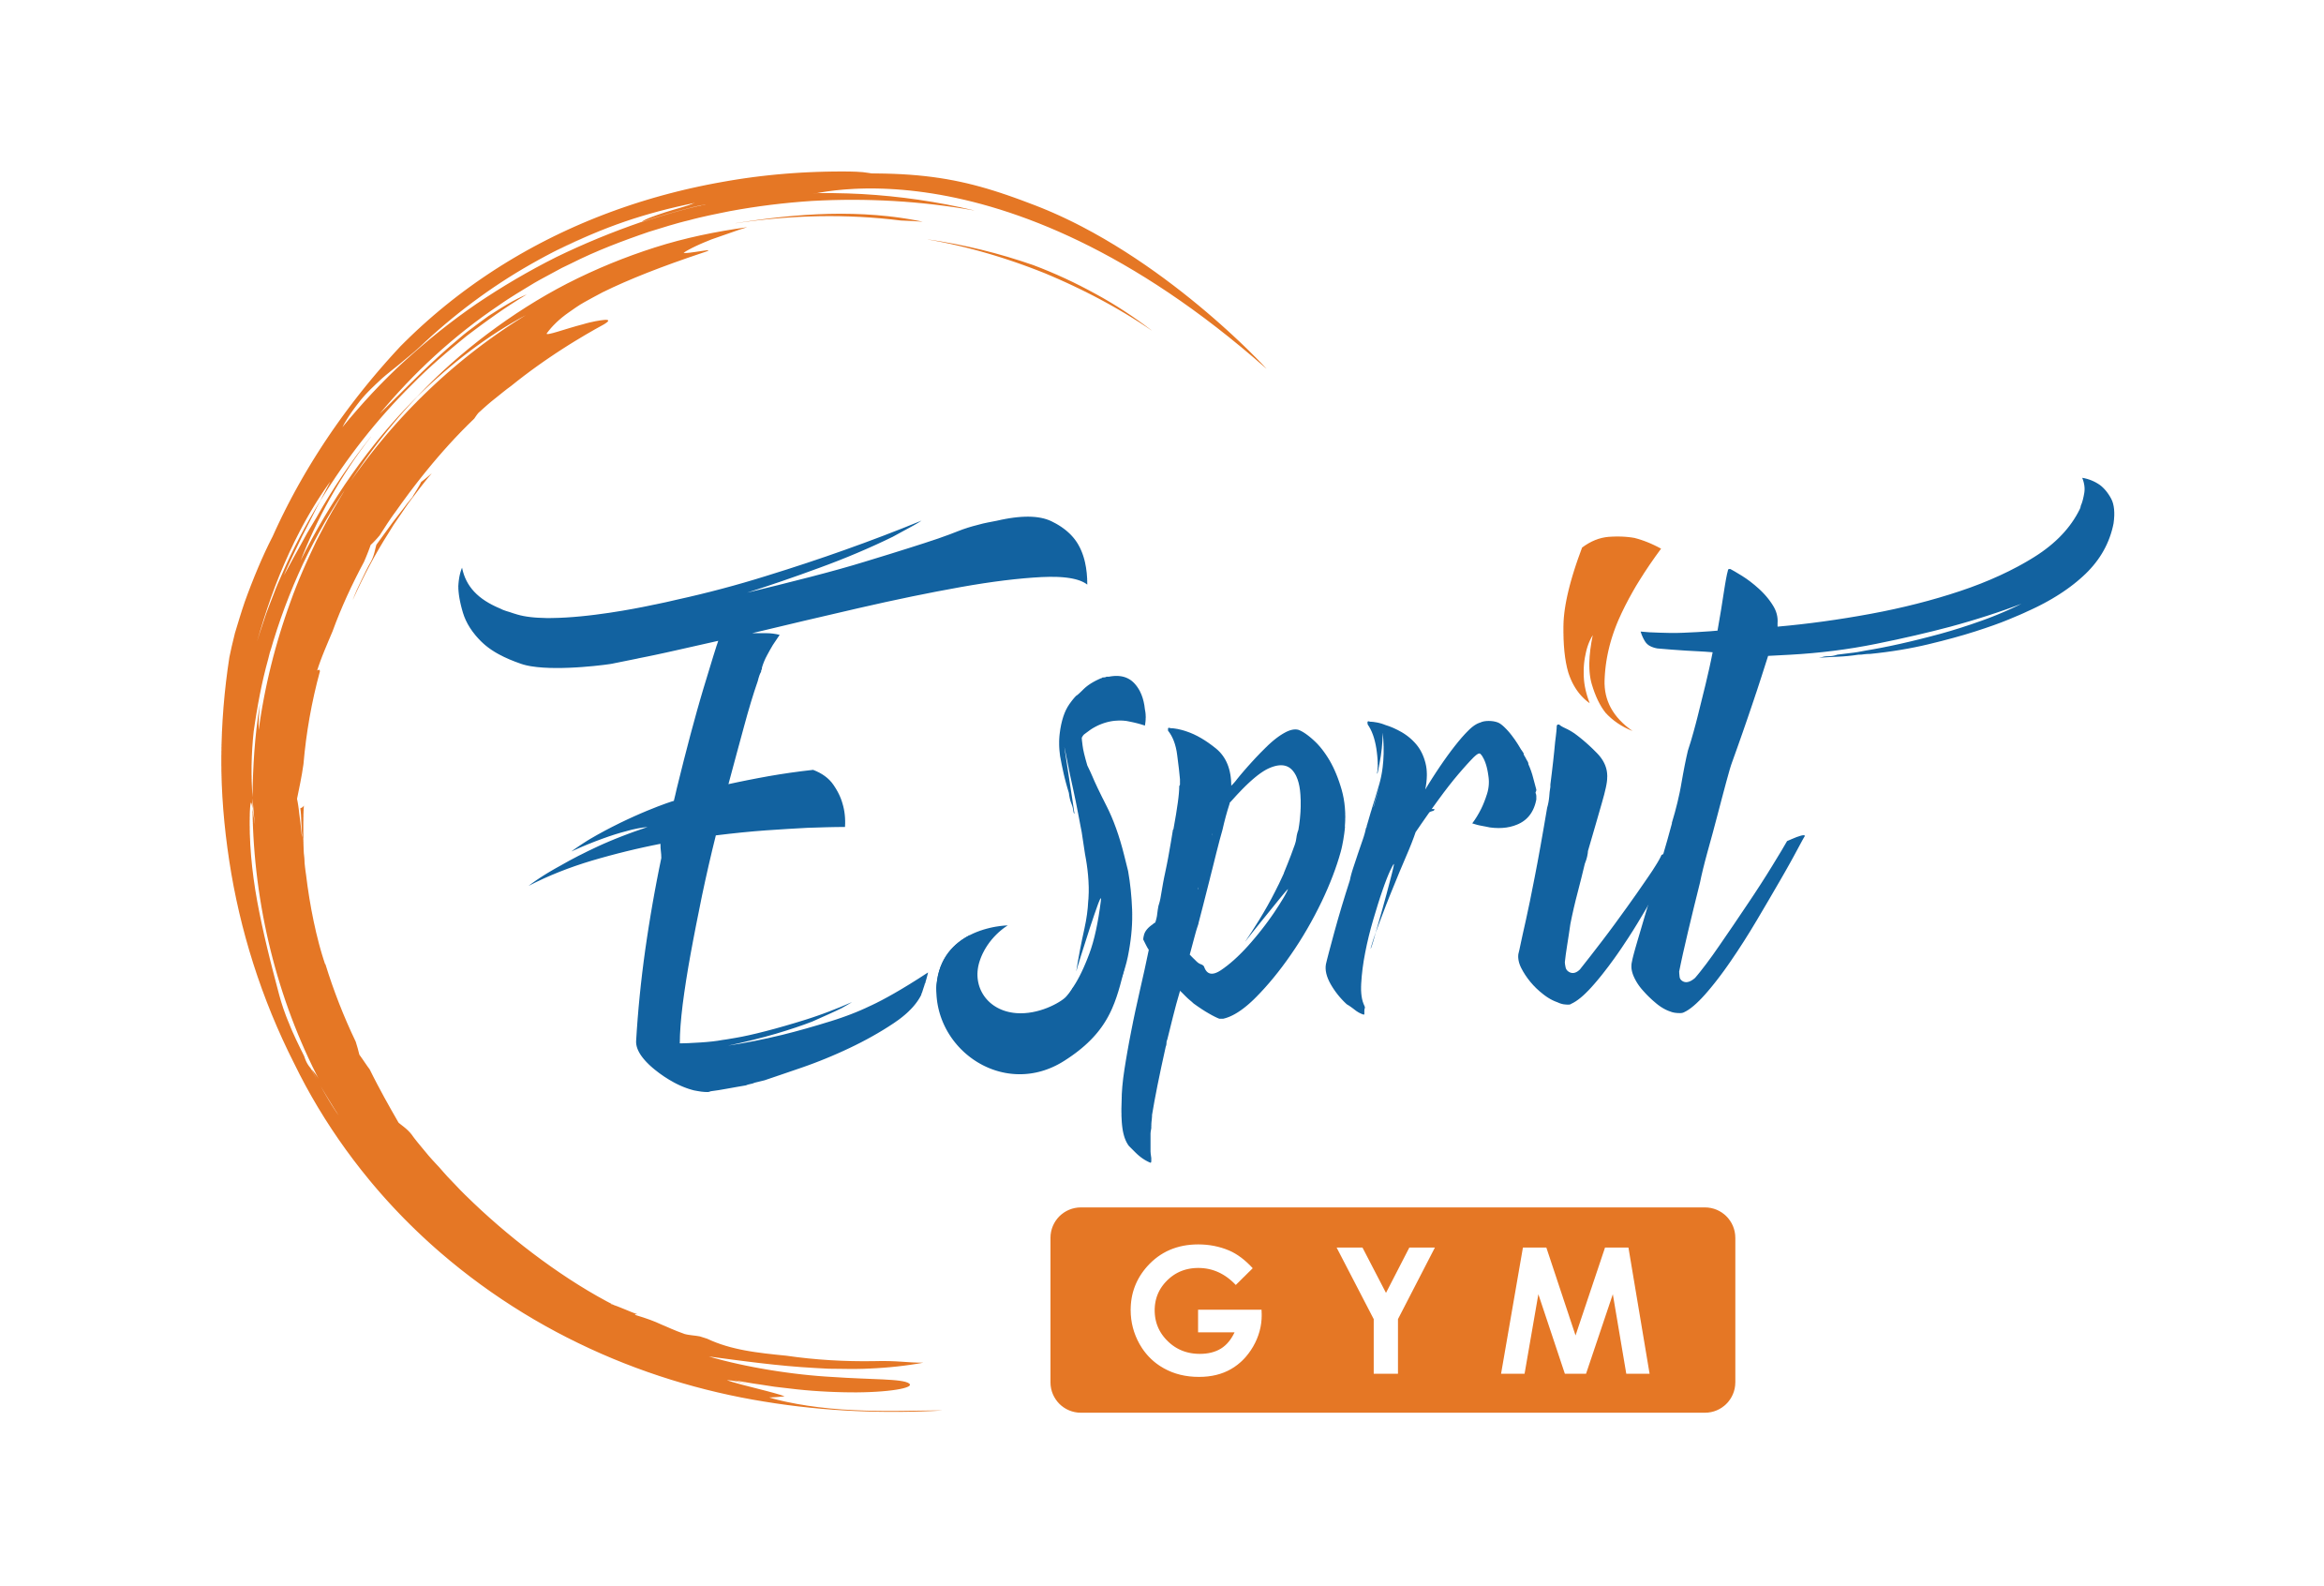 Esprit Gym